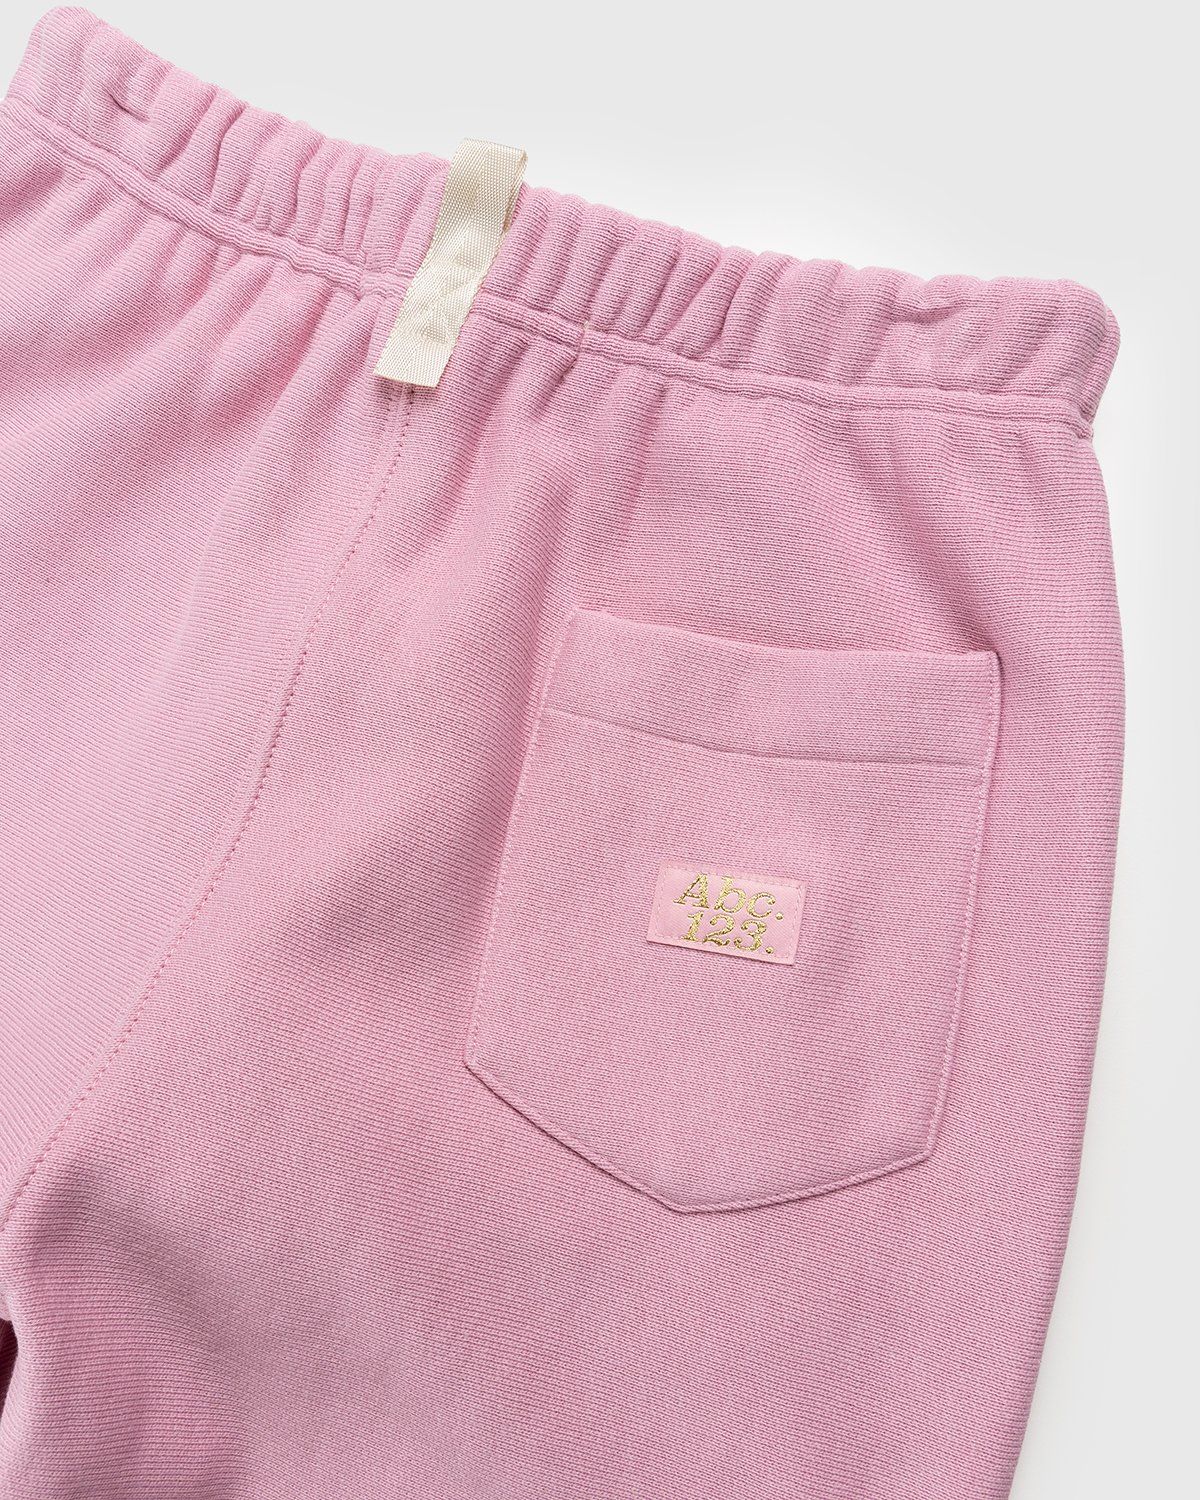 Abc. – French Terry Sweatpants Morganite - Pants - Pink - Image 3